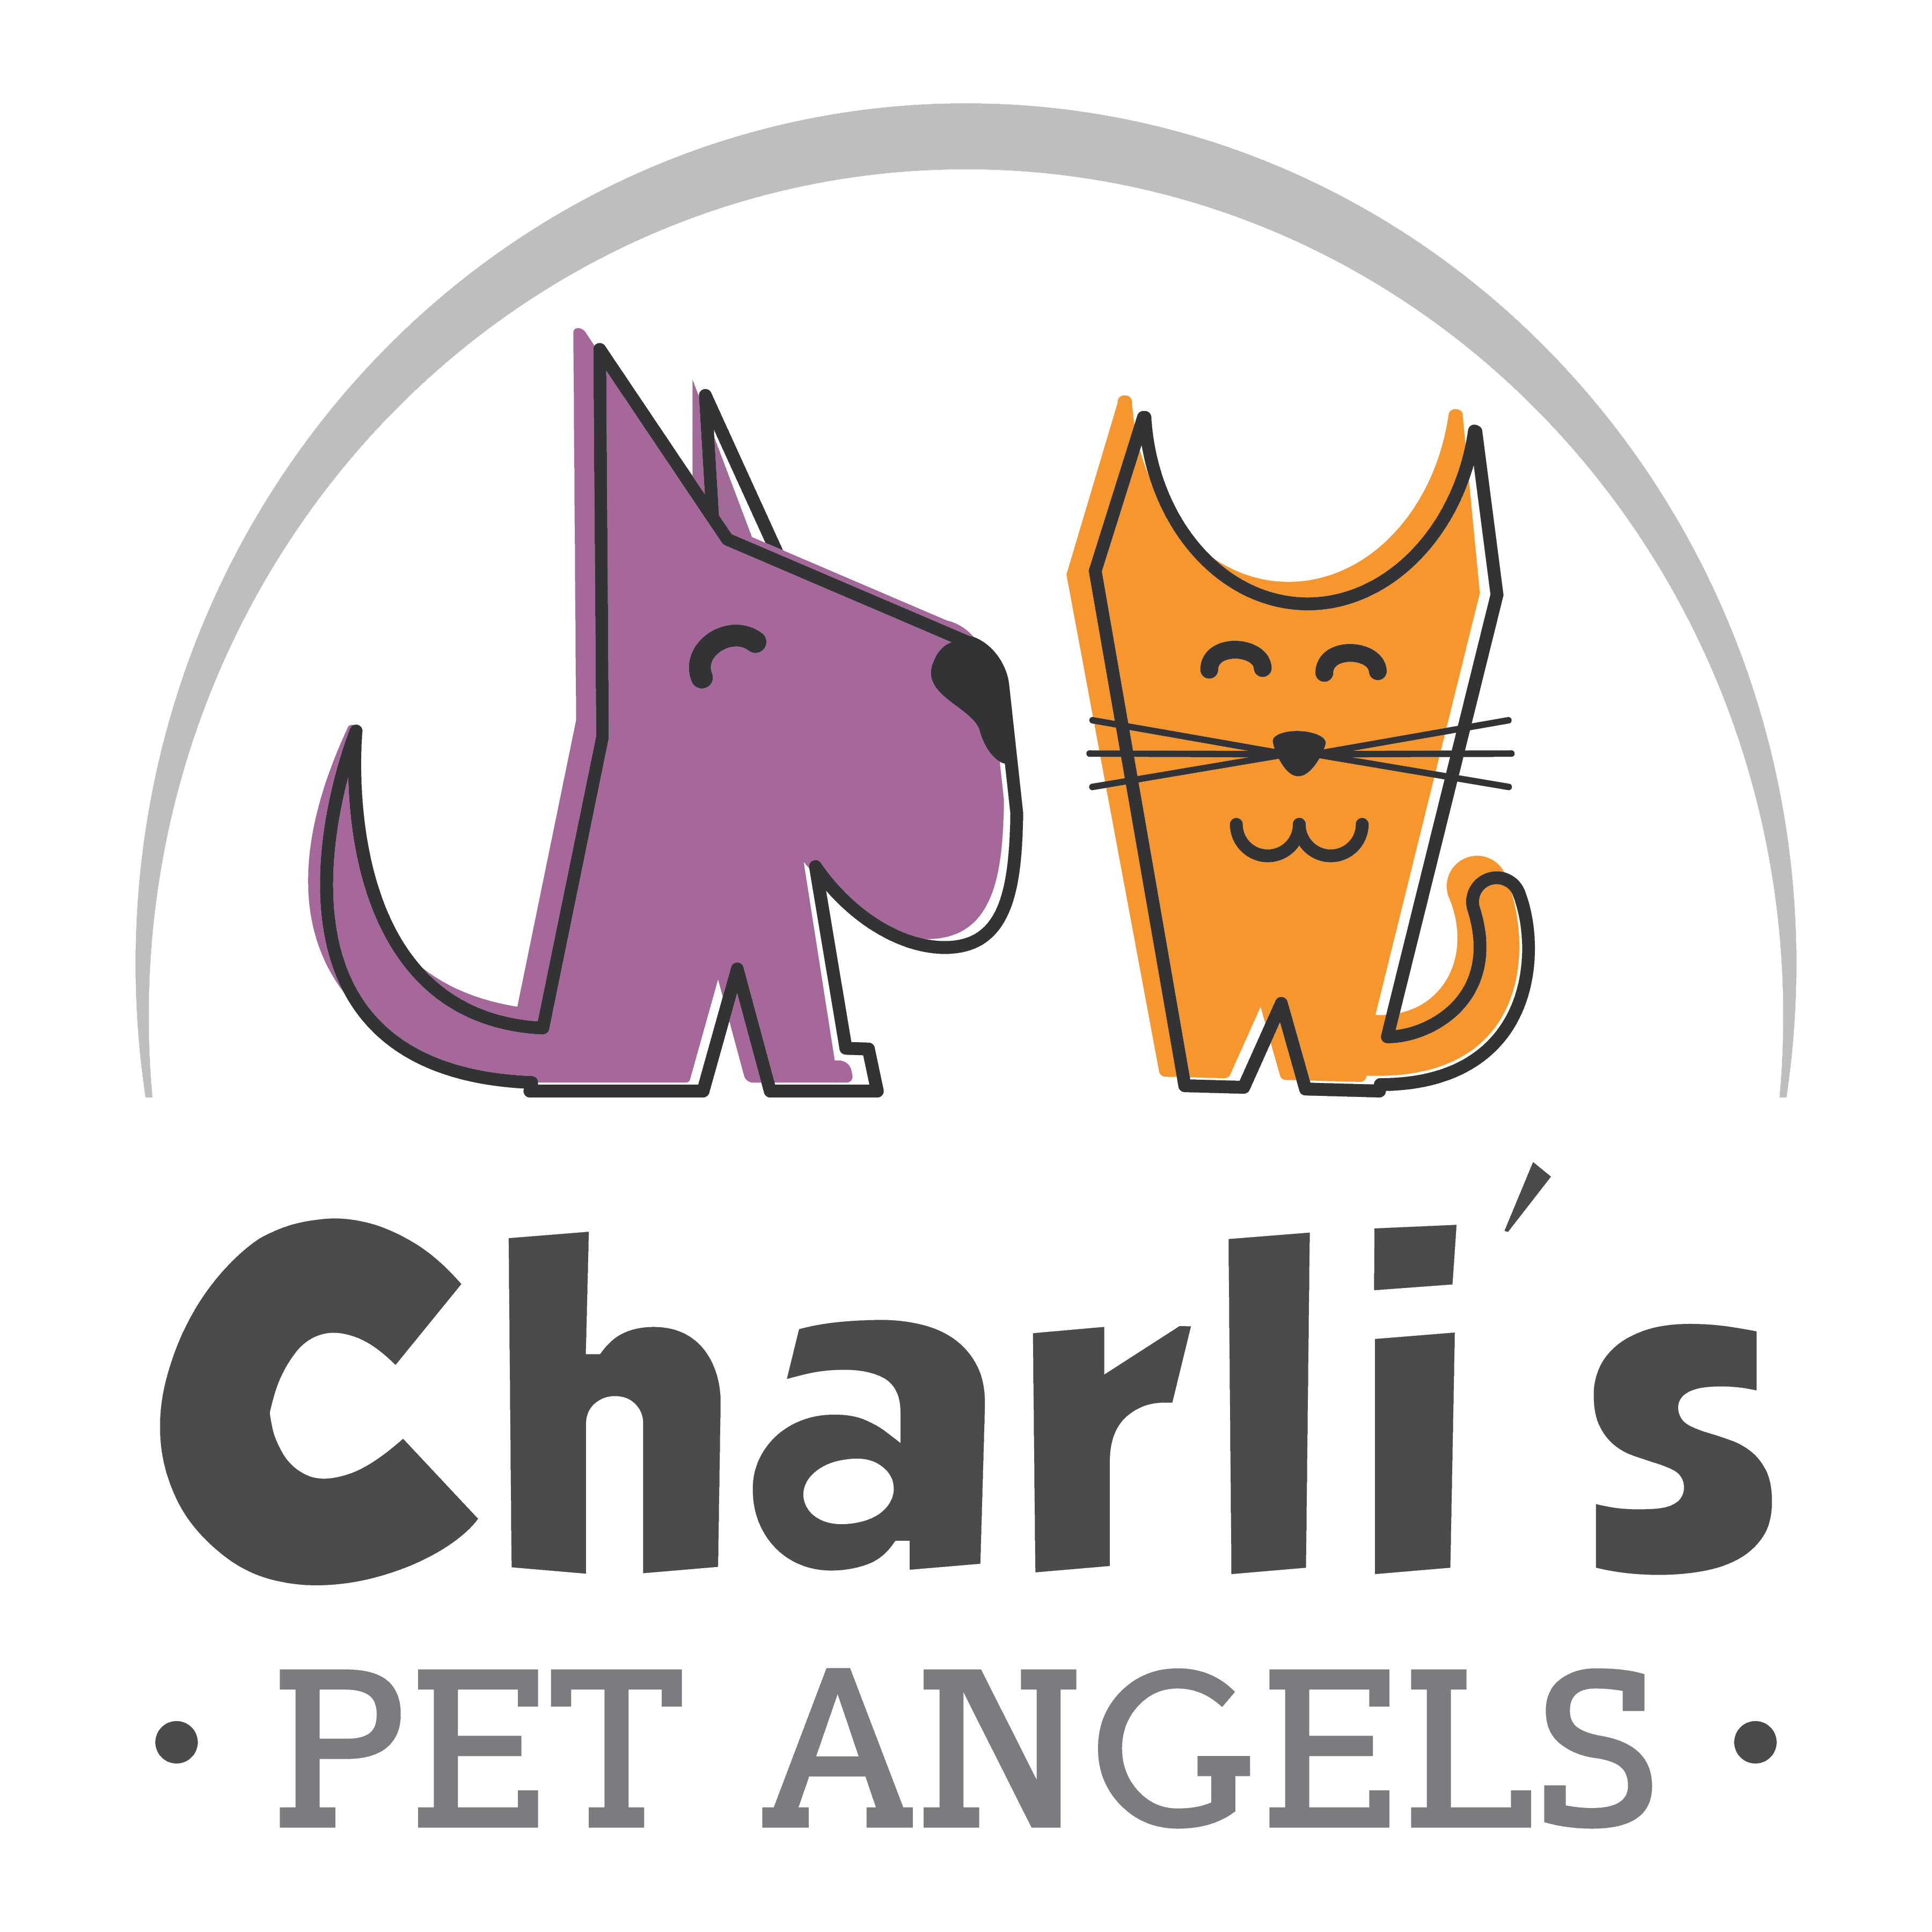 Cats Dogs логотип. Логотип кат & дог. Pro Cat логотип. Логотип питомника кошек. Pet angel